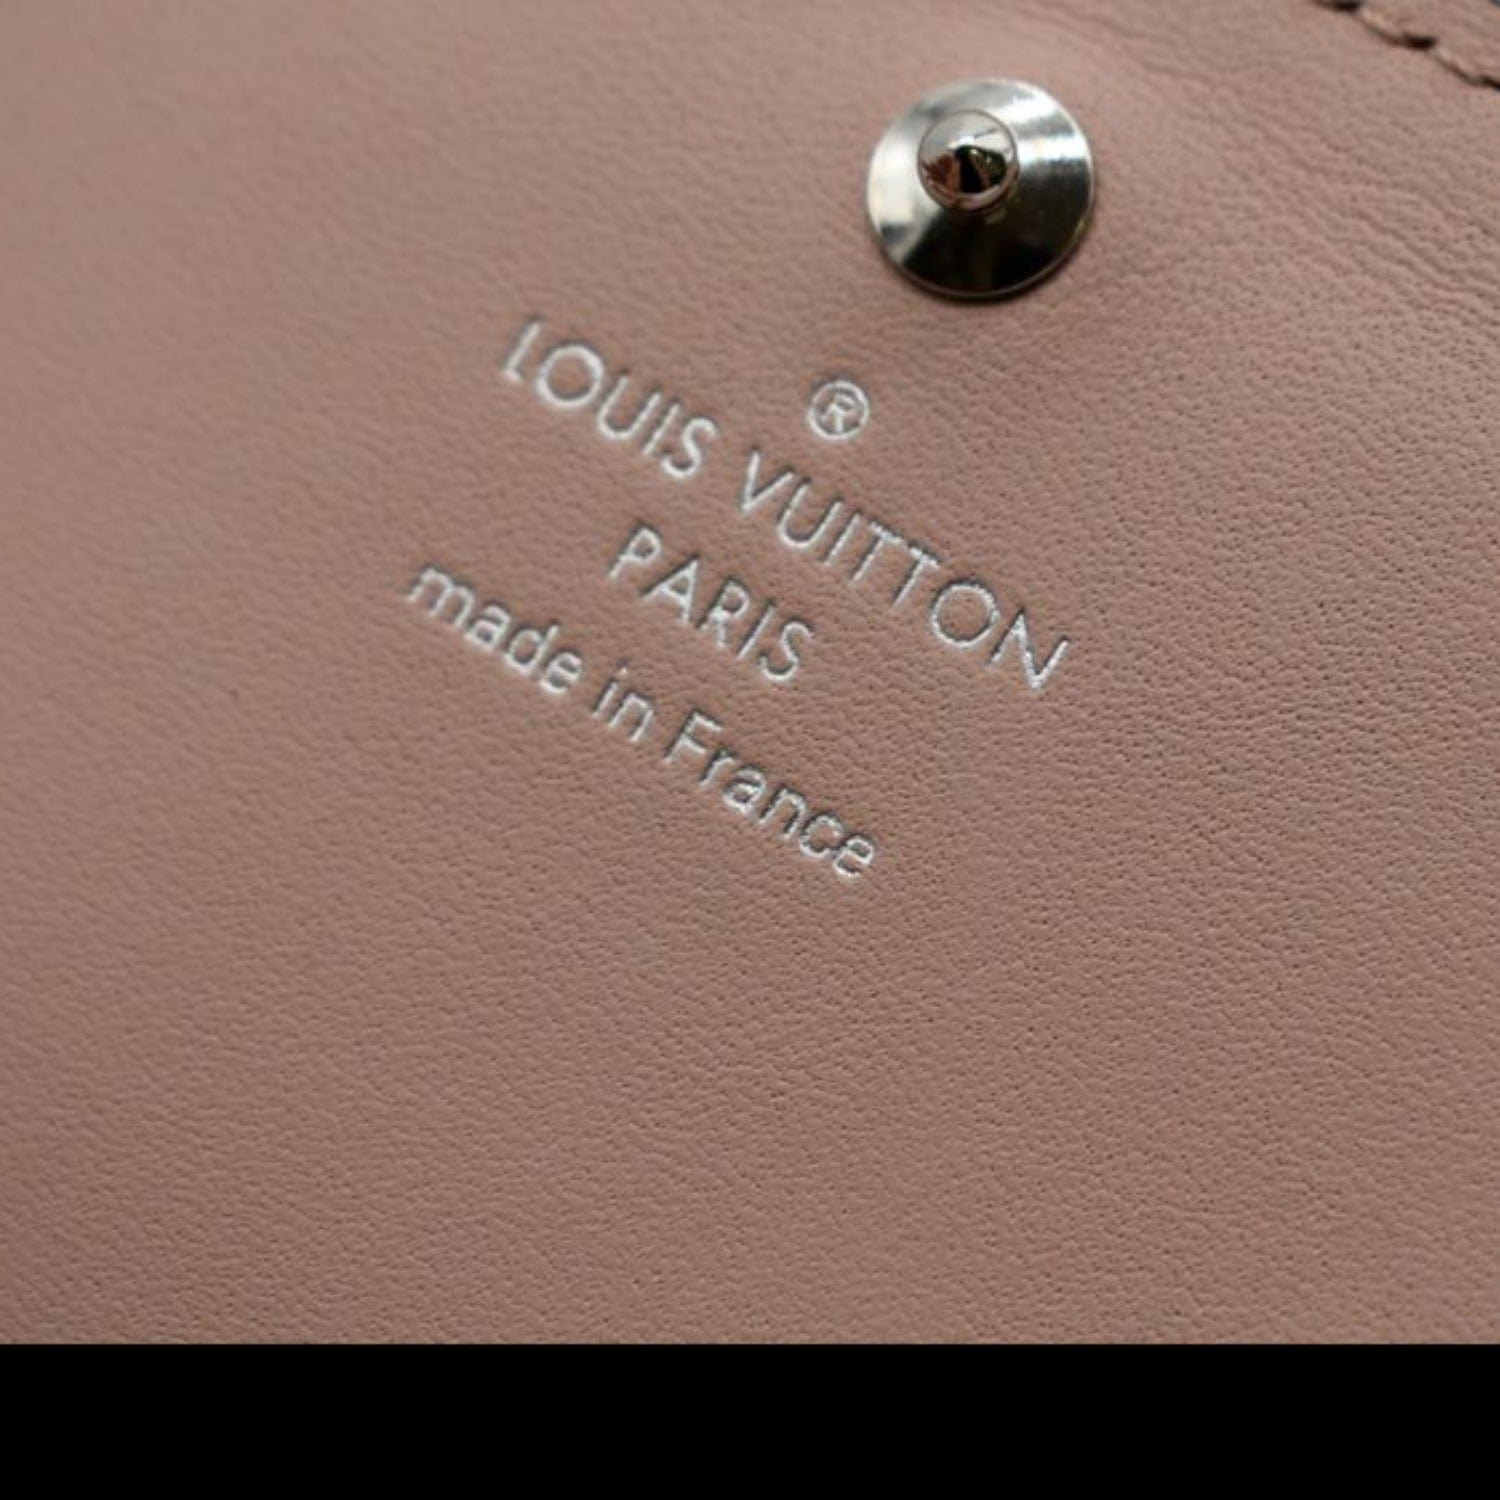 LOUIS VUITTON Iris Mahina Monogram Leather Compact Wallet Magnolia - 1